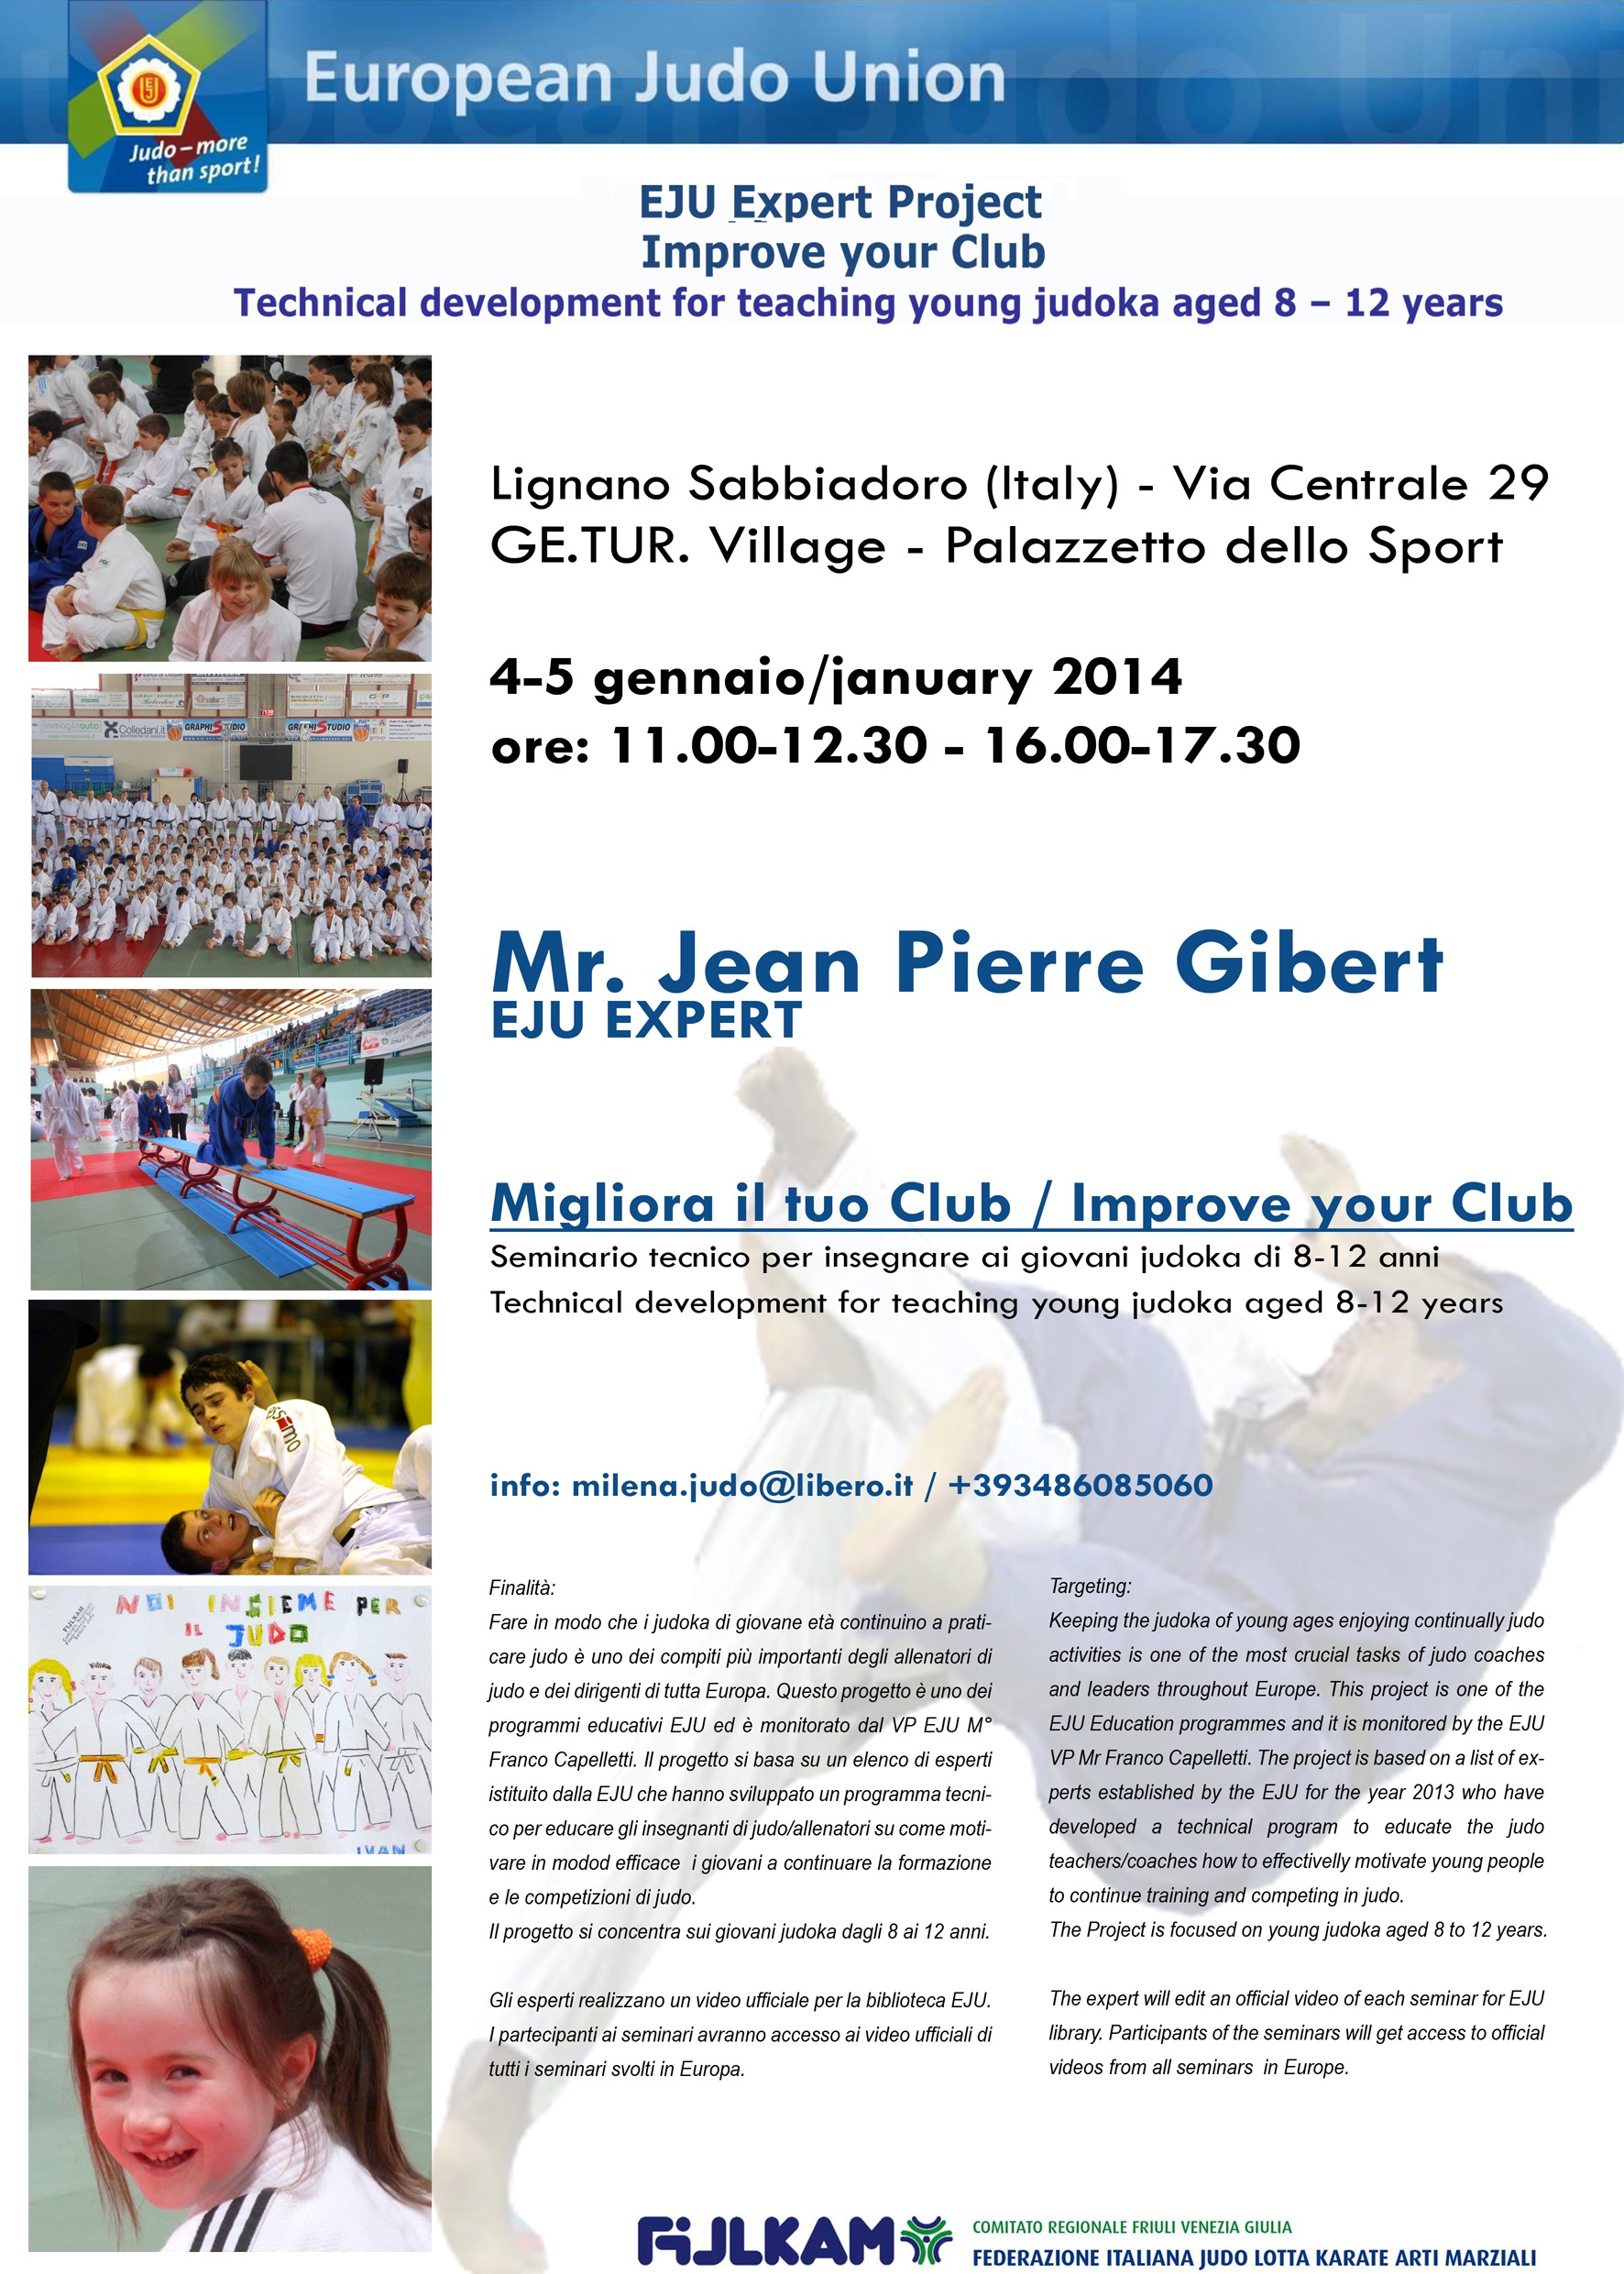 /immagini/Judo/2013/Eju expert-Lignano.jpg